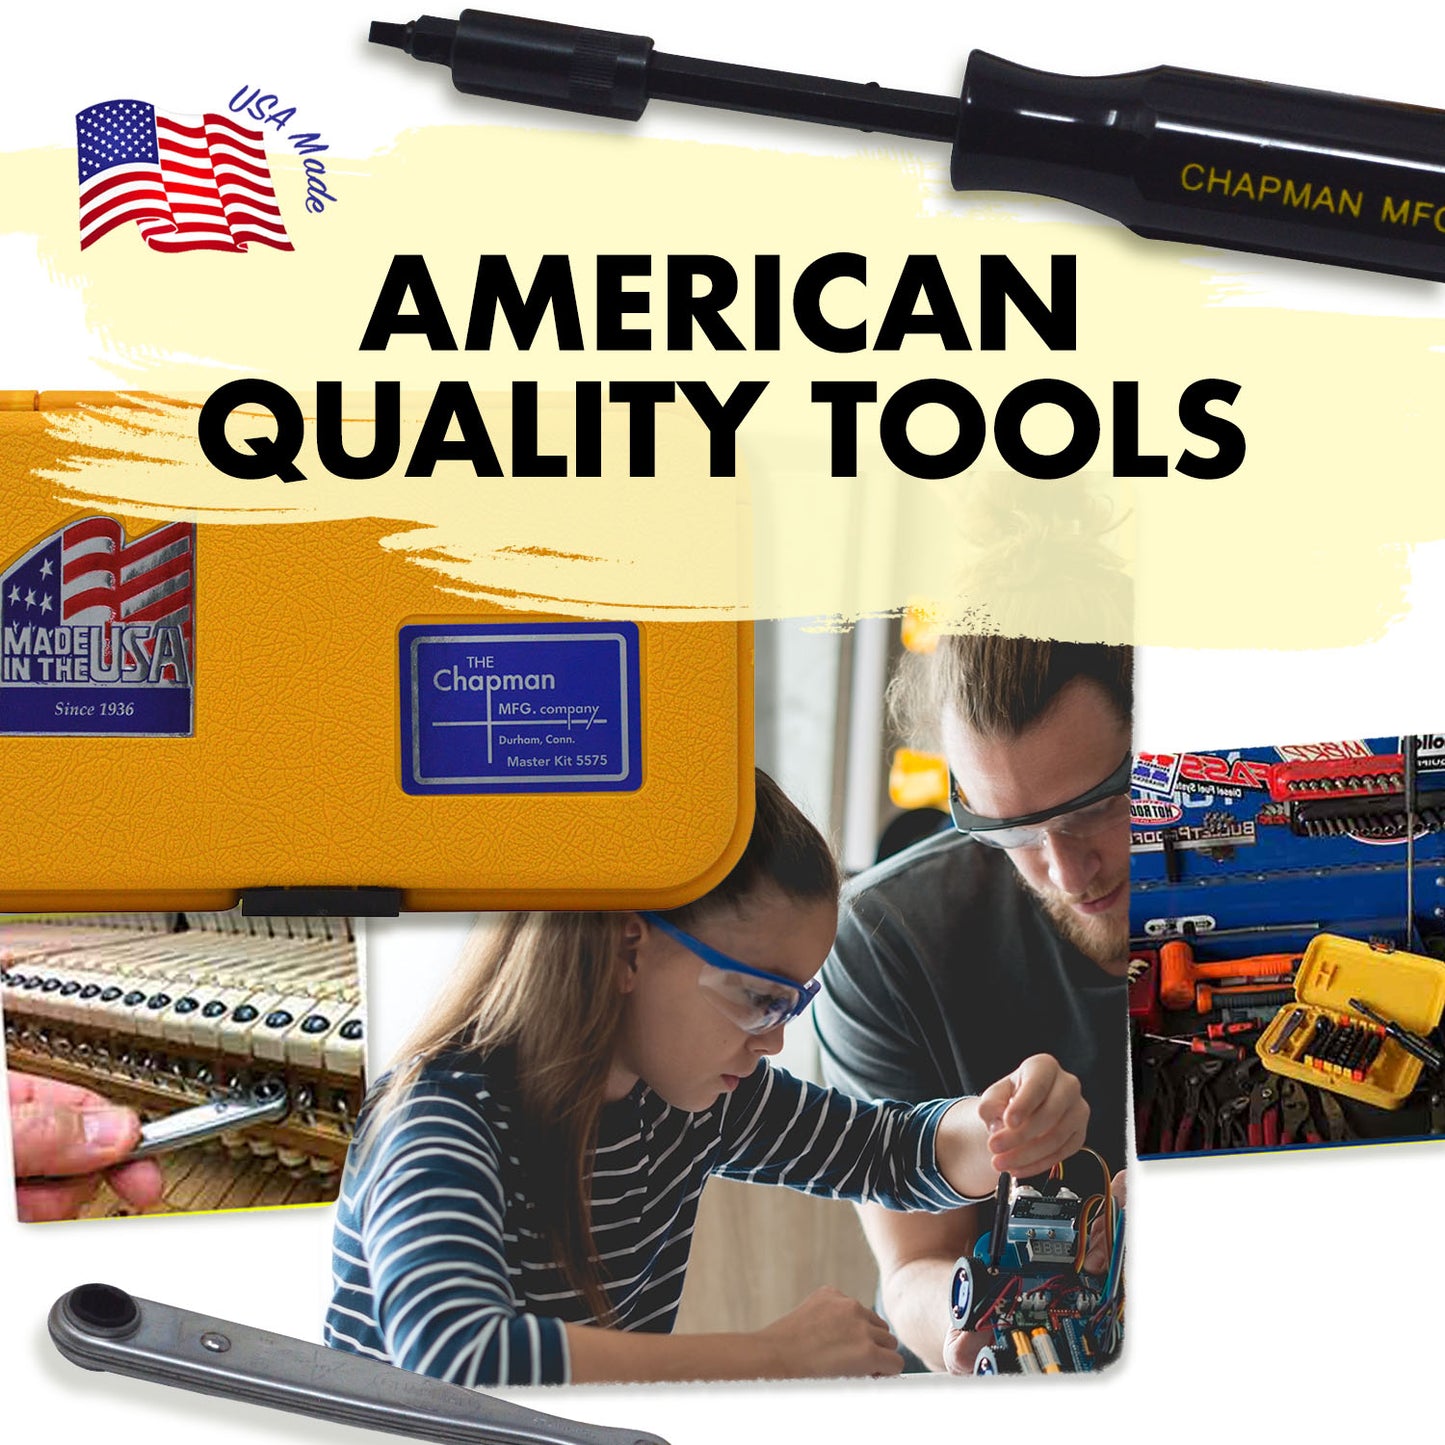 American Quality Tools  Since 1936 |  Chapman MFG